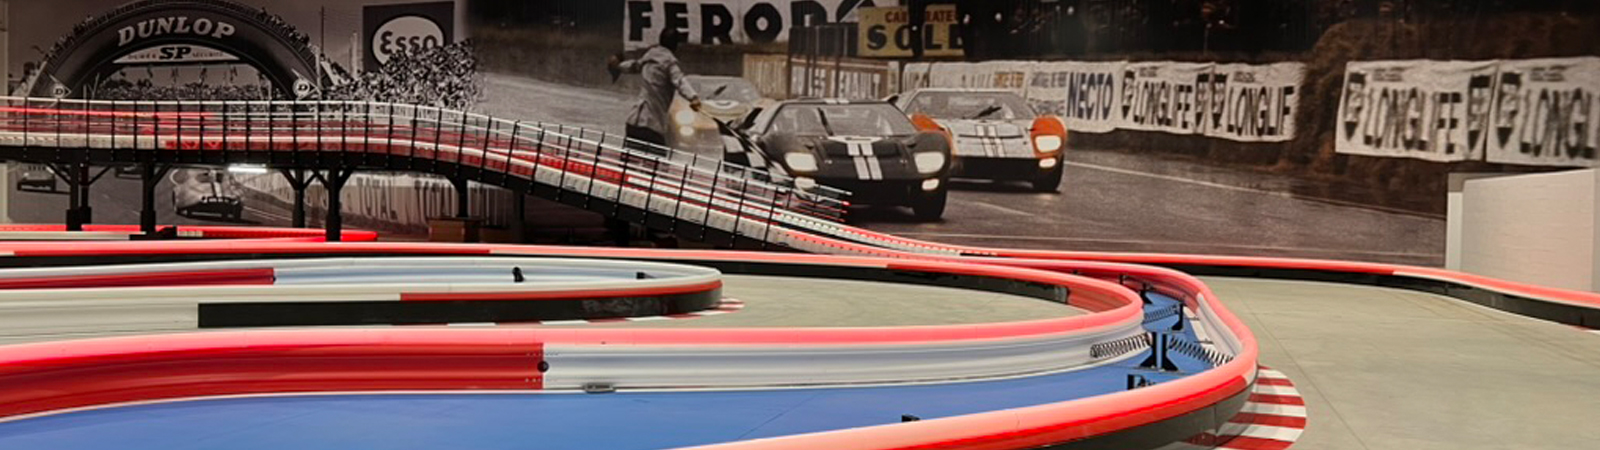 Le Mans Location indoor kart racing